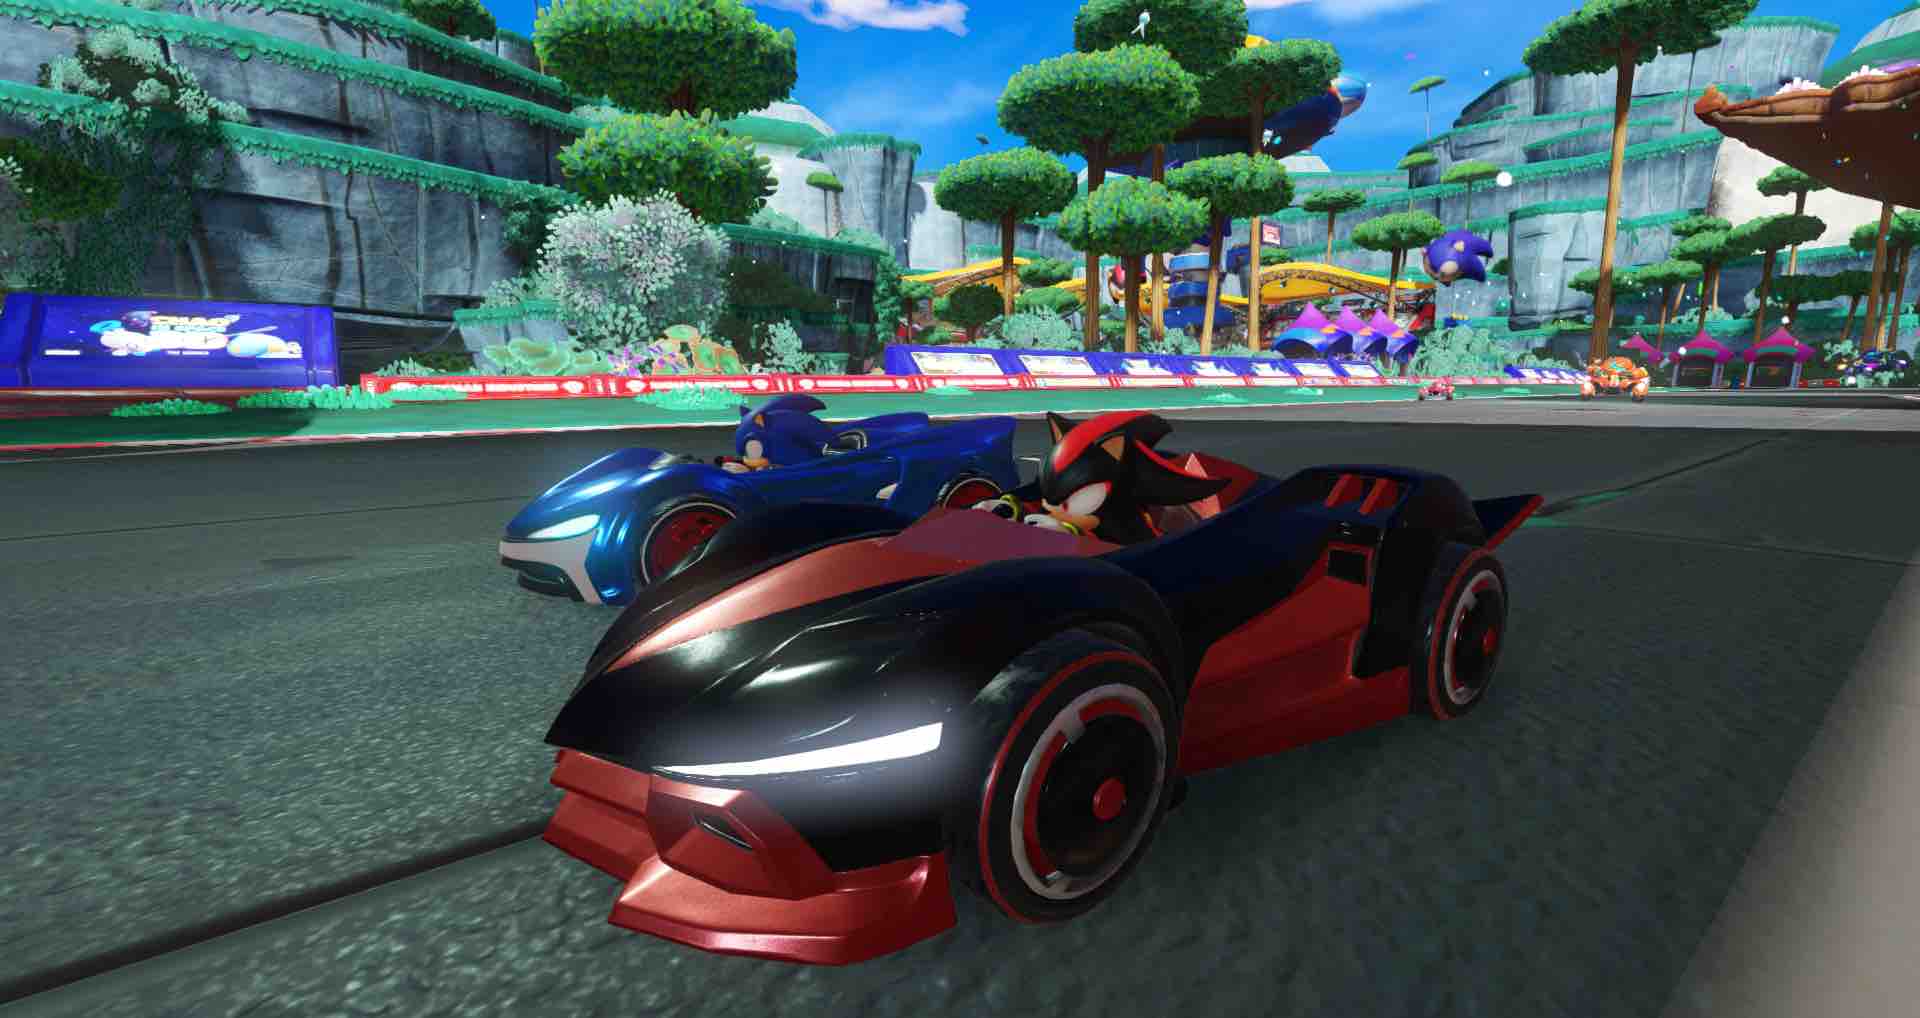 Team Sonic Racing Screenshot 1